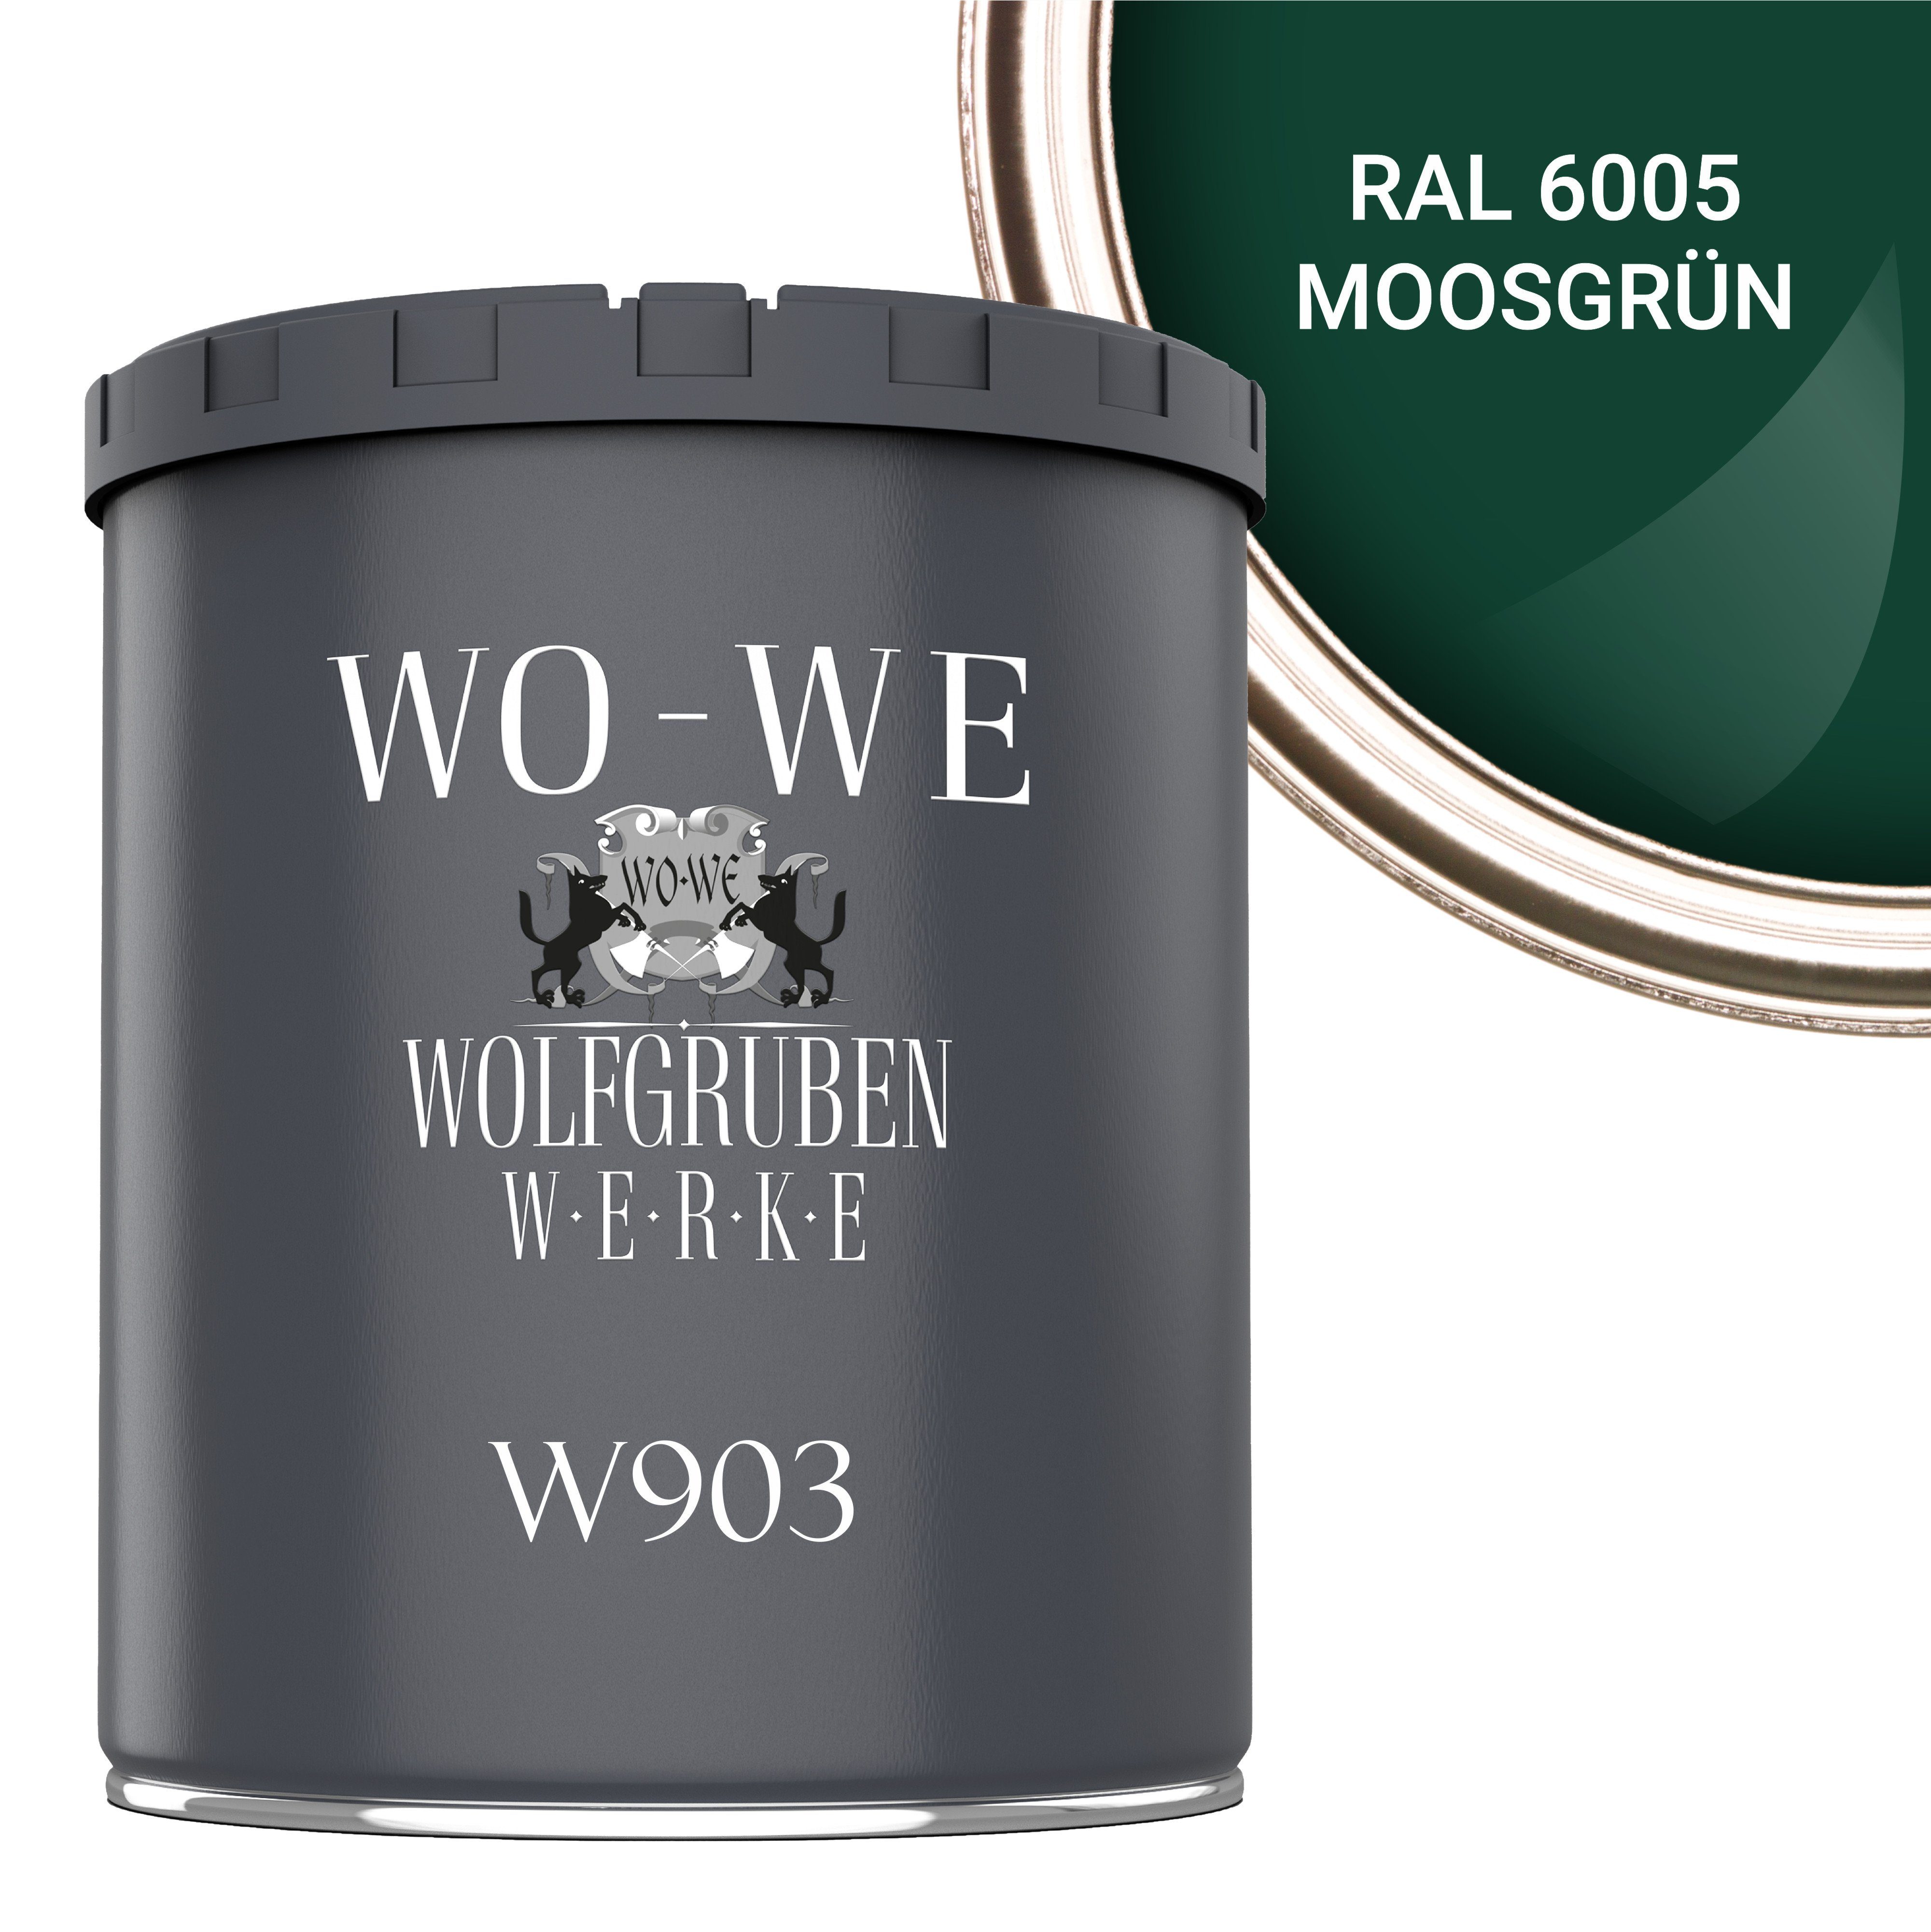 WO-WE Heizkörperlack Heizkörperfarbe 1-10L, Heizungsfarbe Moosgrün RAL 6005 W903, Wasserbasis